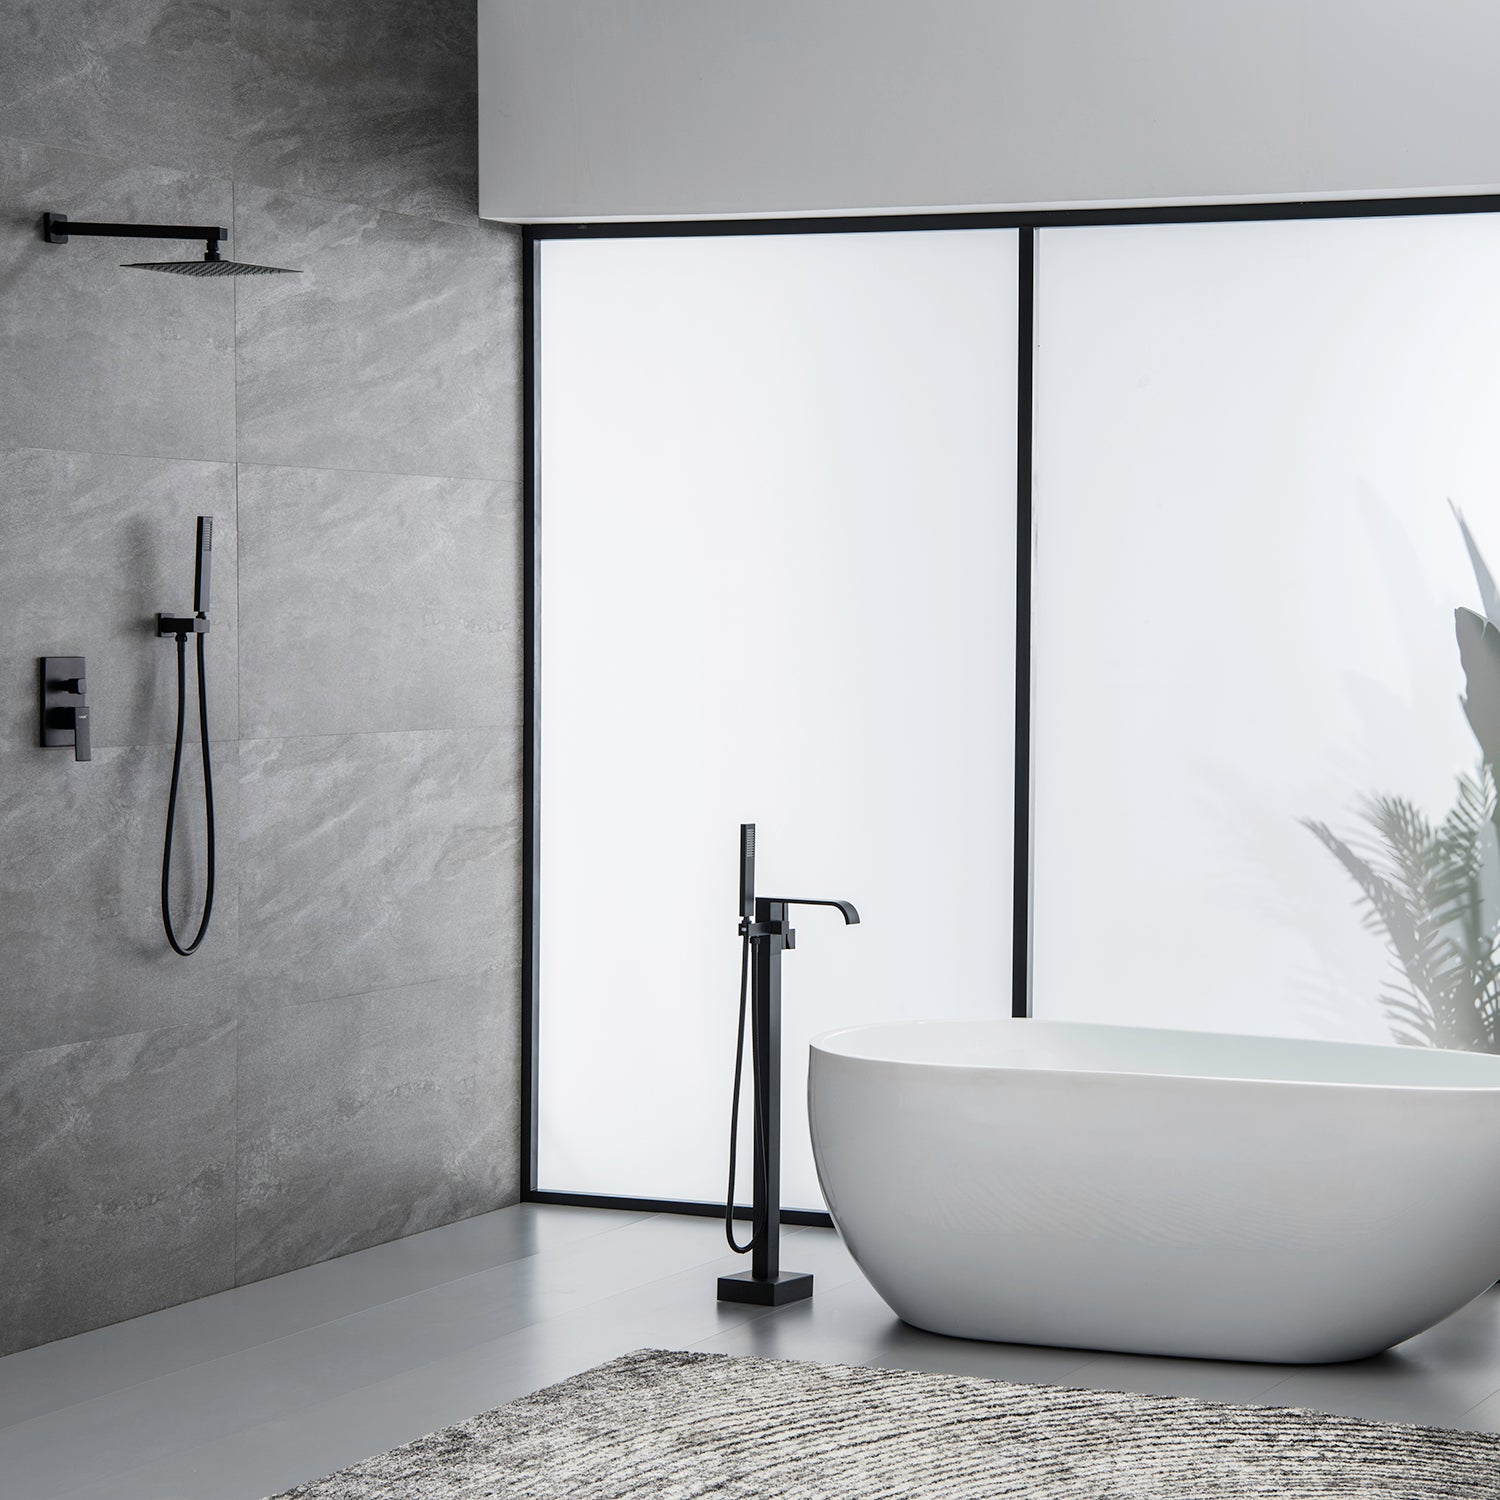 Clihome® | Freestanding Single-Handle Floor Mount Bathtub Faucet Filler with Handshower in Black